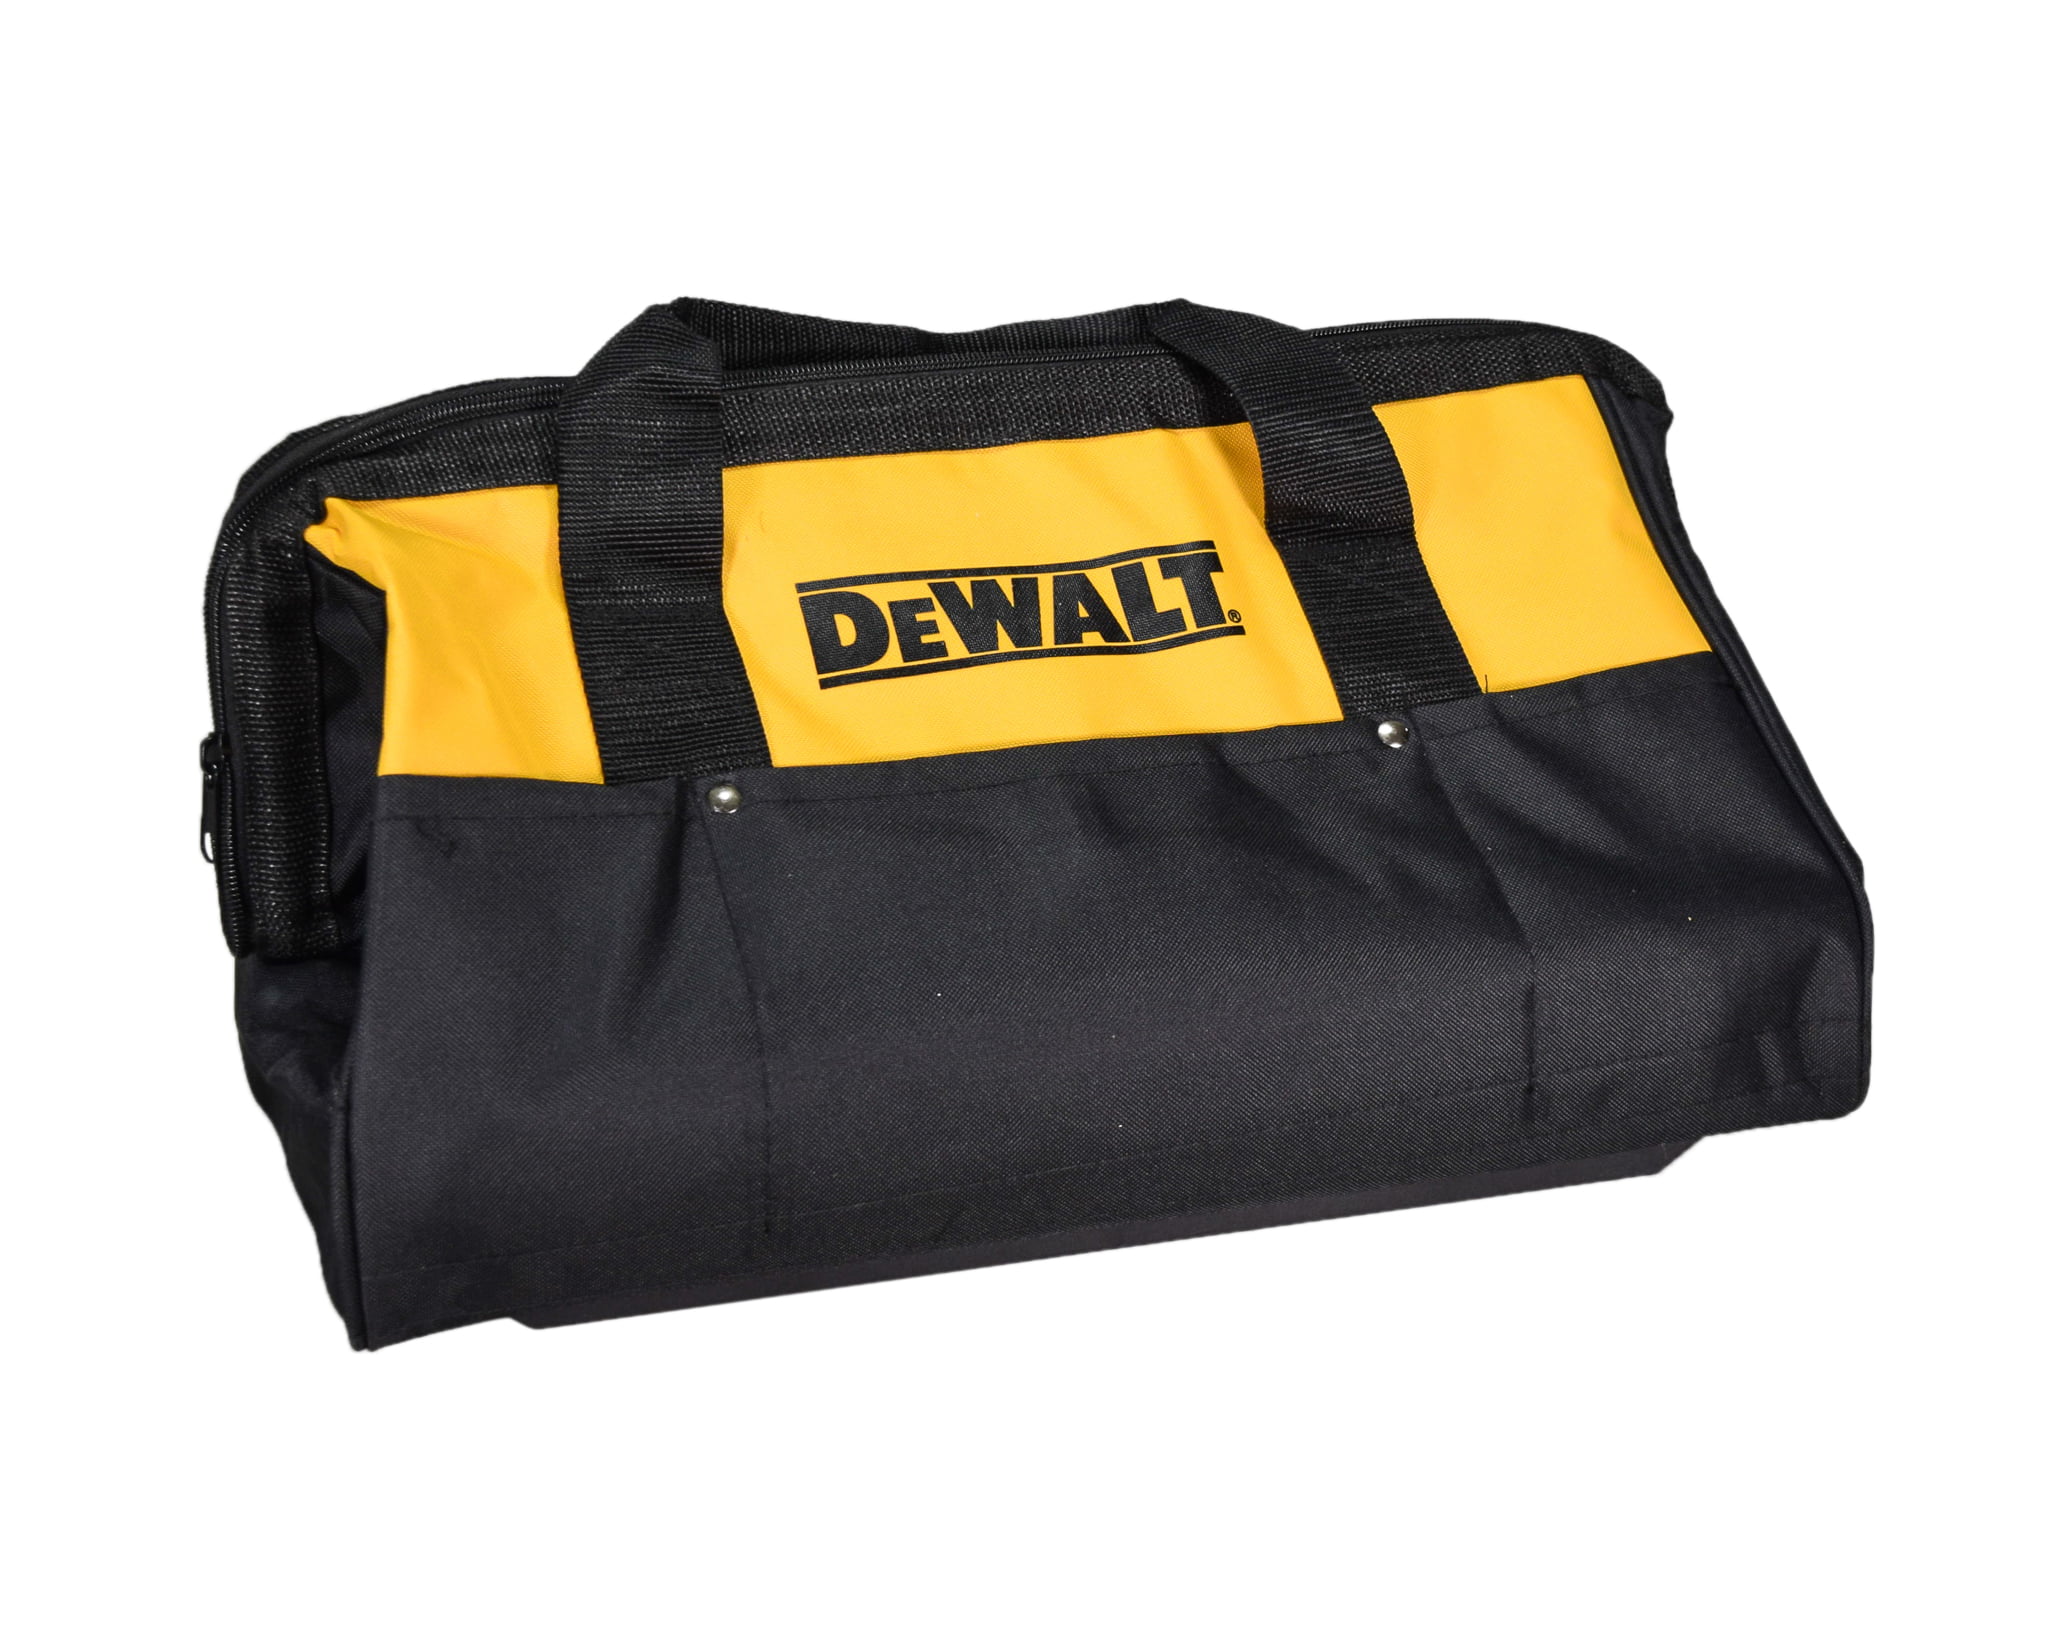 Dewalt DCS389X2 Flexvolt 60V Max Brushless Reciprocating Saw Kit with (2)  9.0Ah Batteries, Charger and Tool Bag